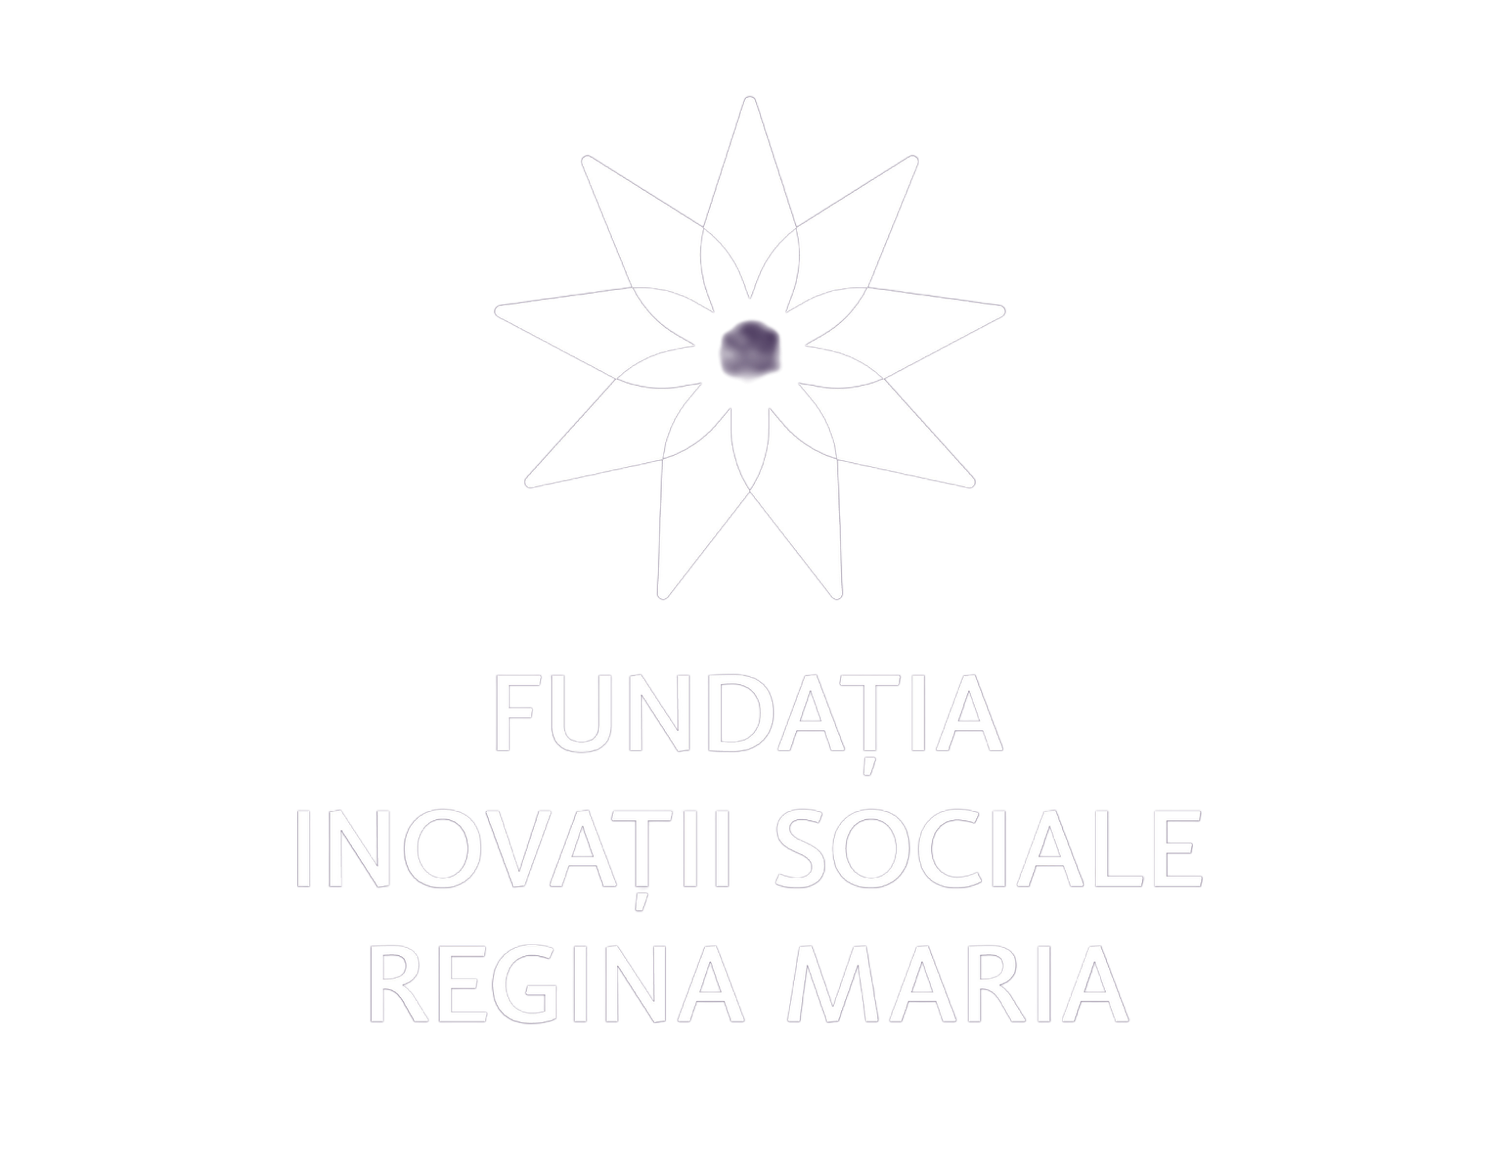 Fundatia Inovatii Sociale Regina Maria